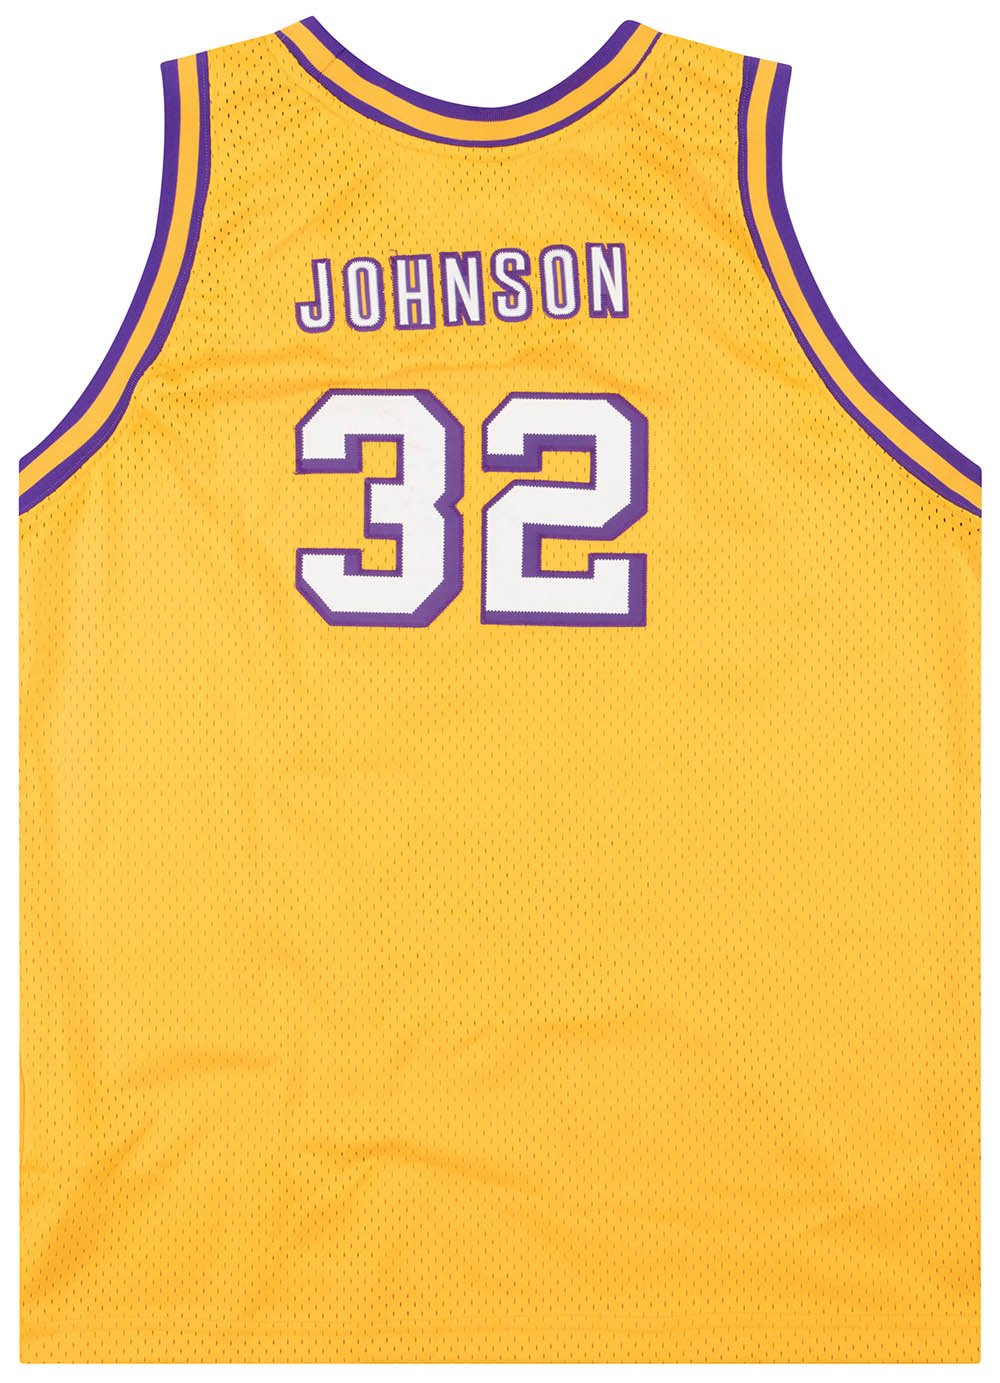 NBA Los Angeles Lakers Basketball Adidas Jersey size Large #32 Johnson